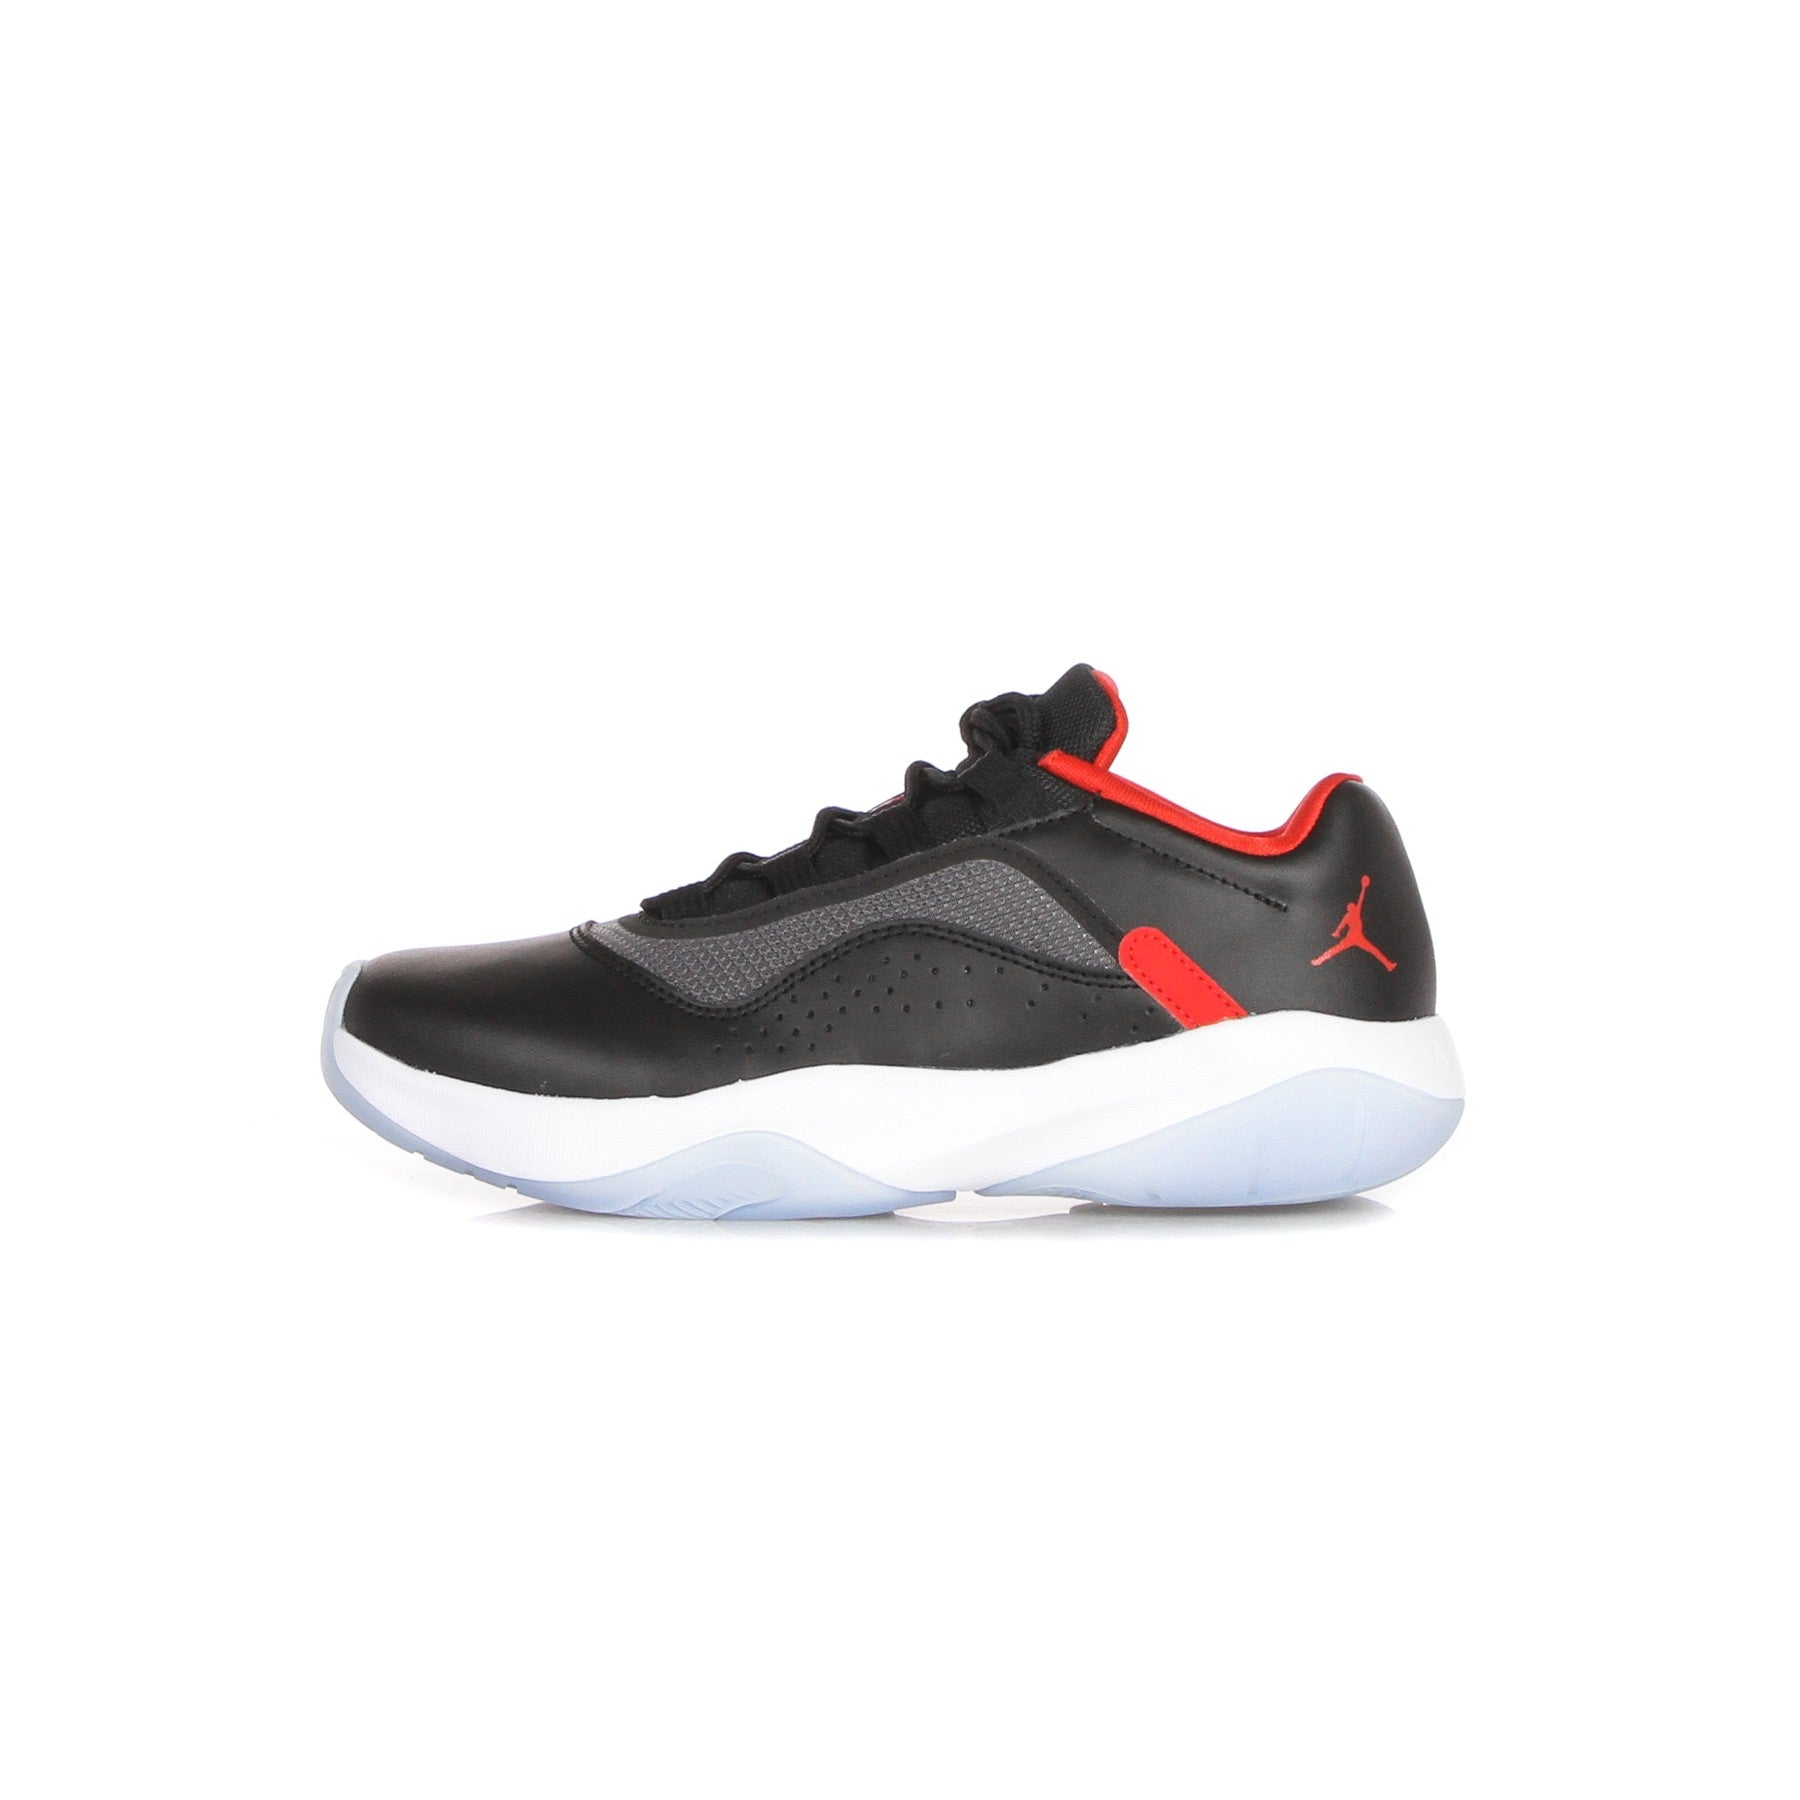 Jordan, Scarpa Basket Ragazzo Air Jordan 11 Comfort Low (gs), Black/university Red/white